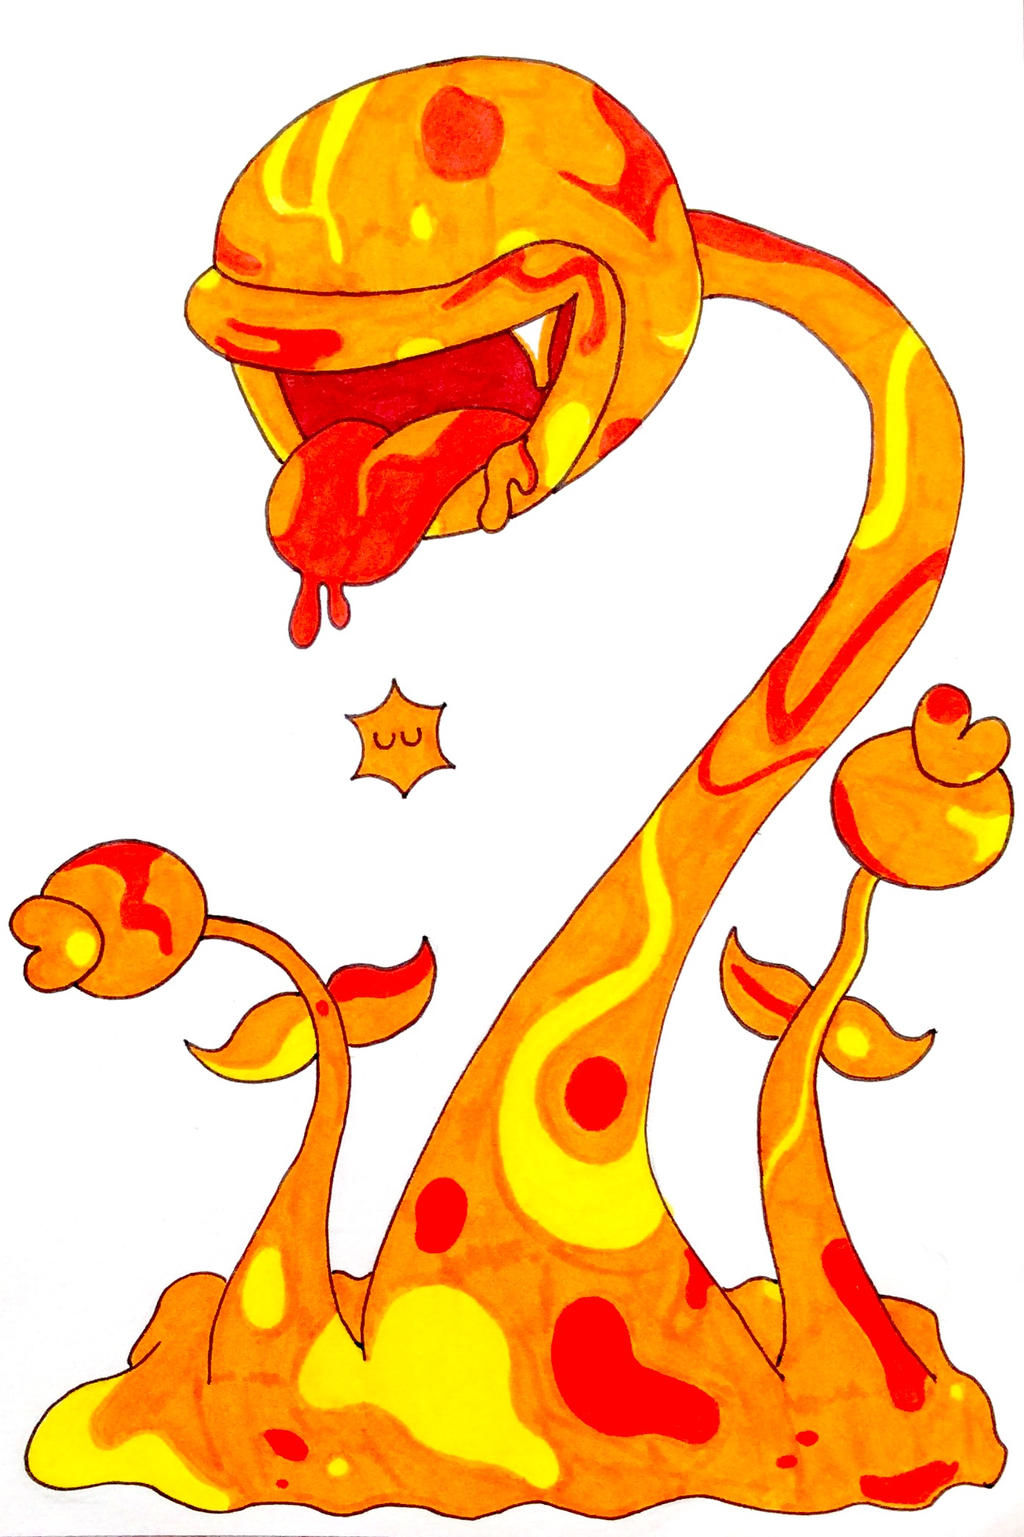 Bowser's paint star guardians-Orange by Iwatchcartoons715 on DeviantArt